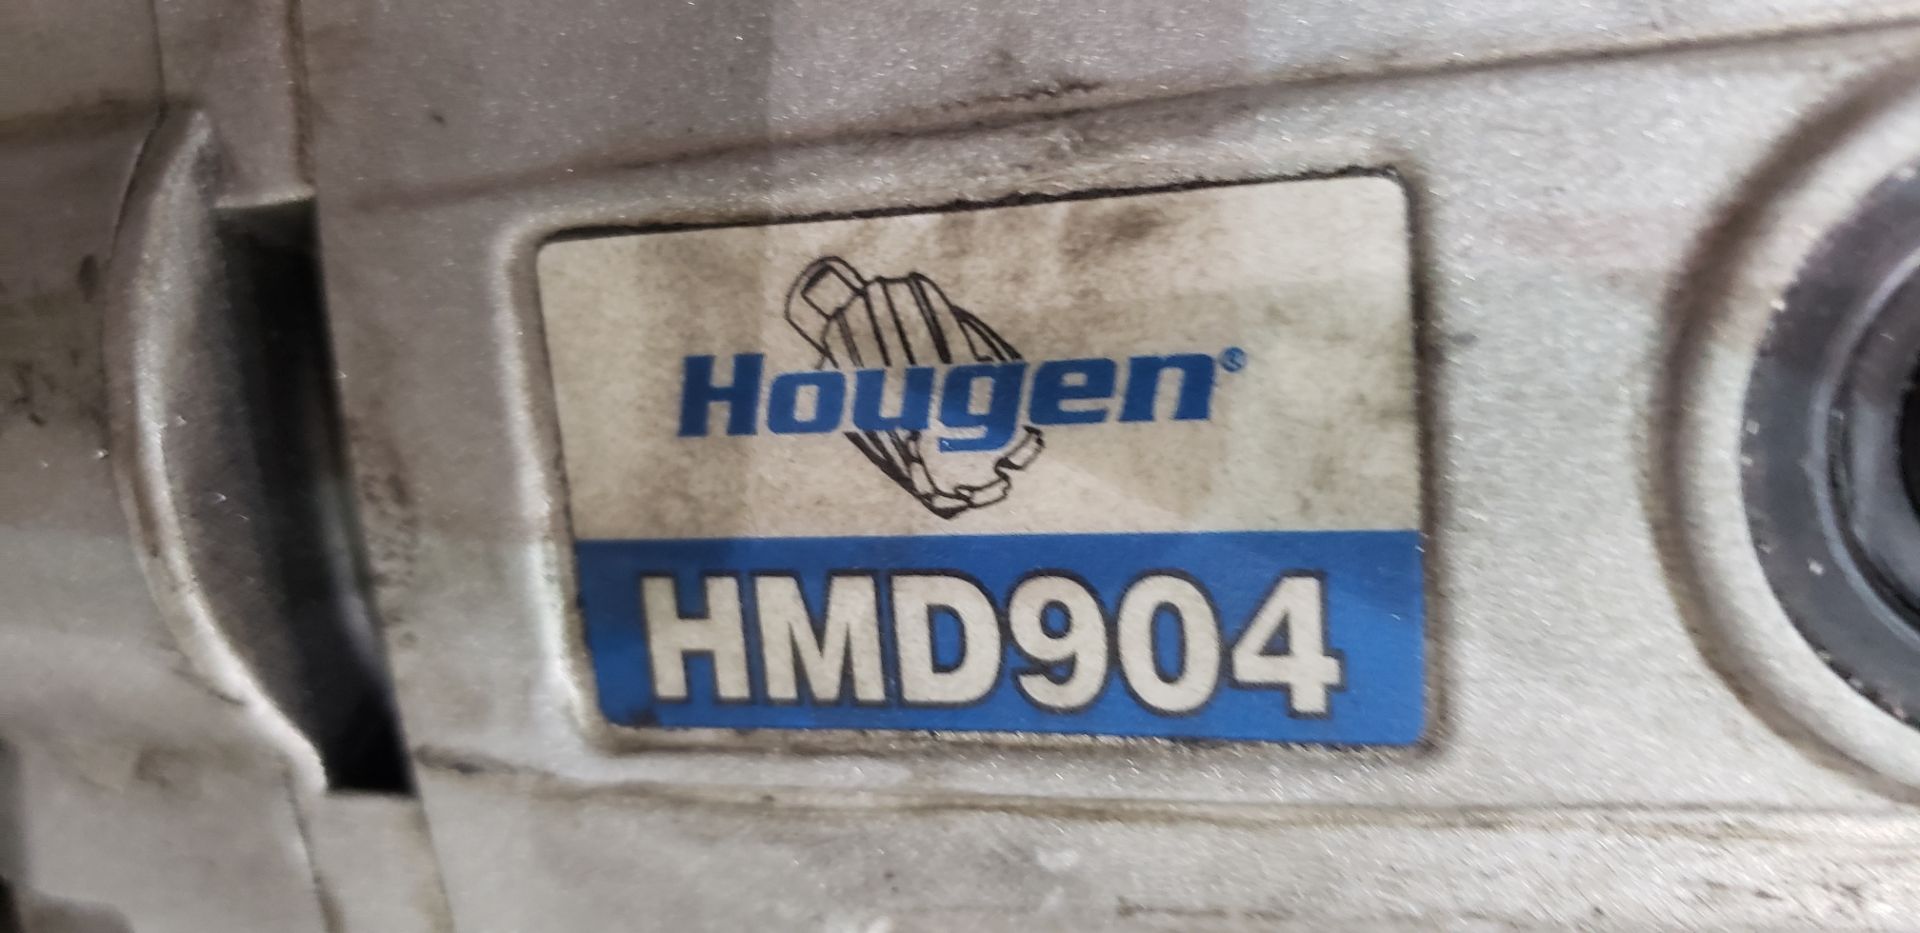 Hougen HMD 904 Magnetic Drill - Image 2 of 3